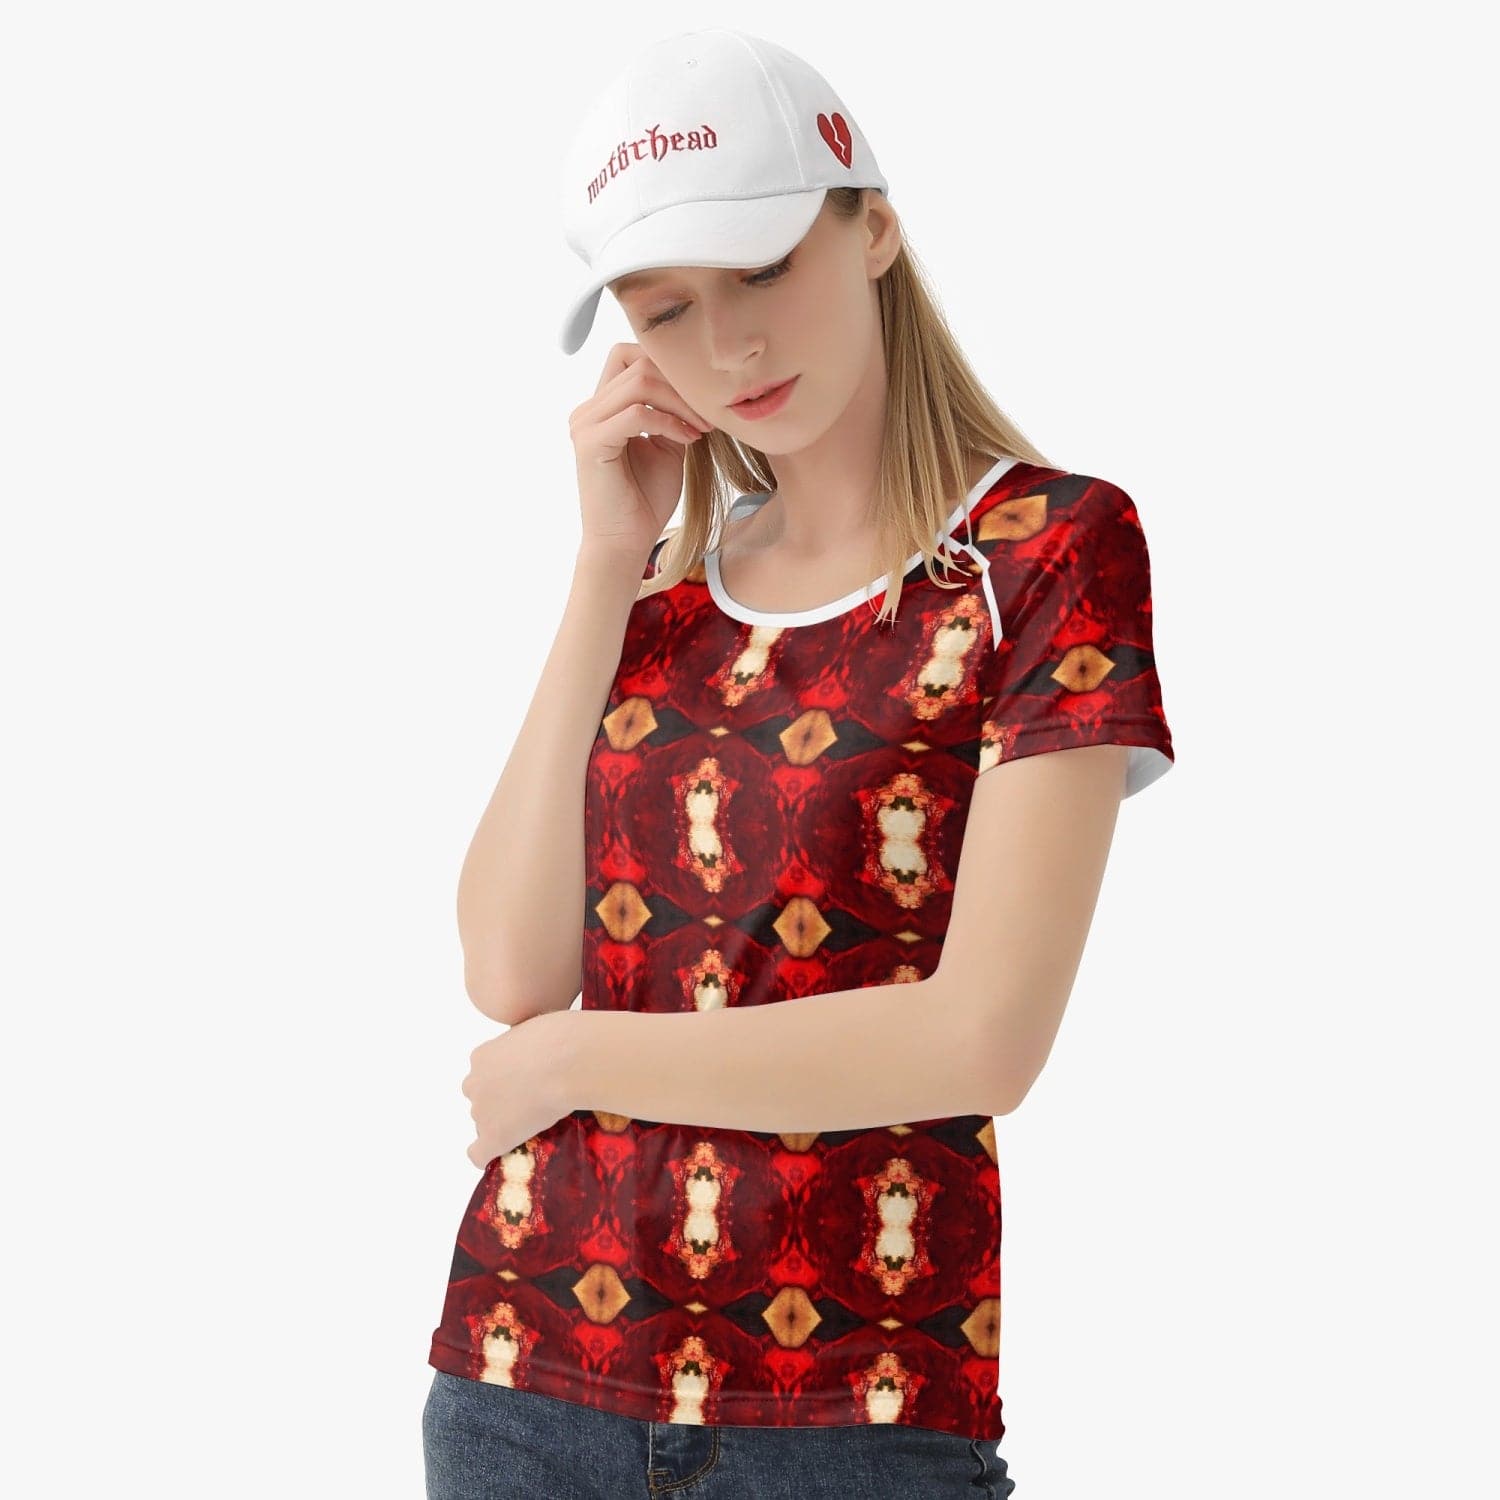 Active Red Yoga top. Handmade  Women T-shirt, Sports/Yoga Top by Sensus Studio Design